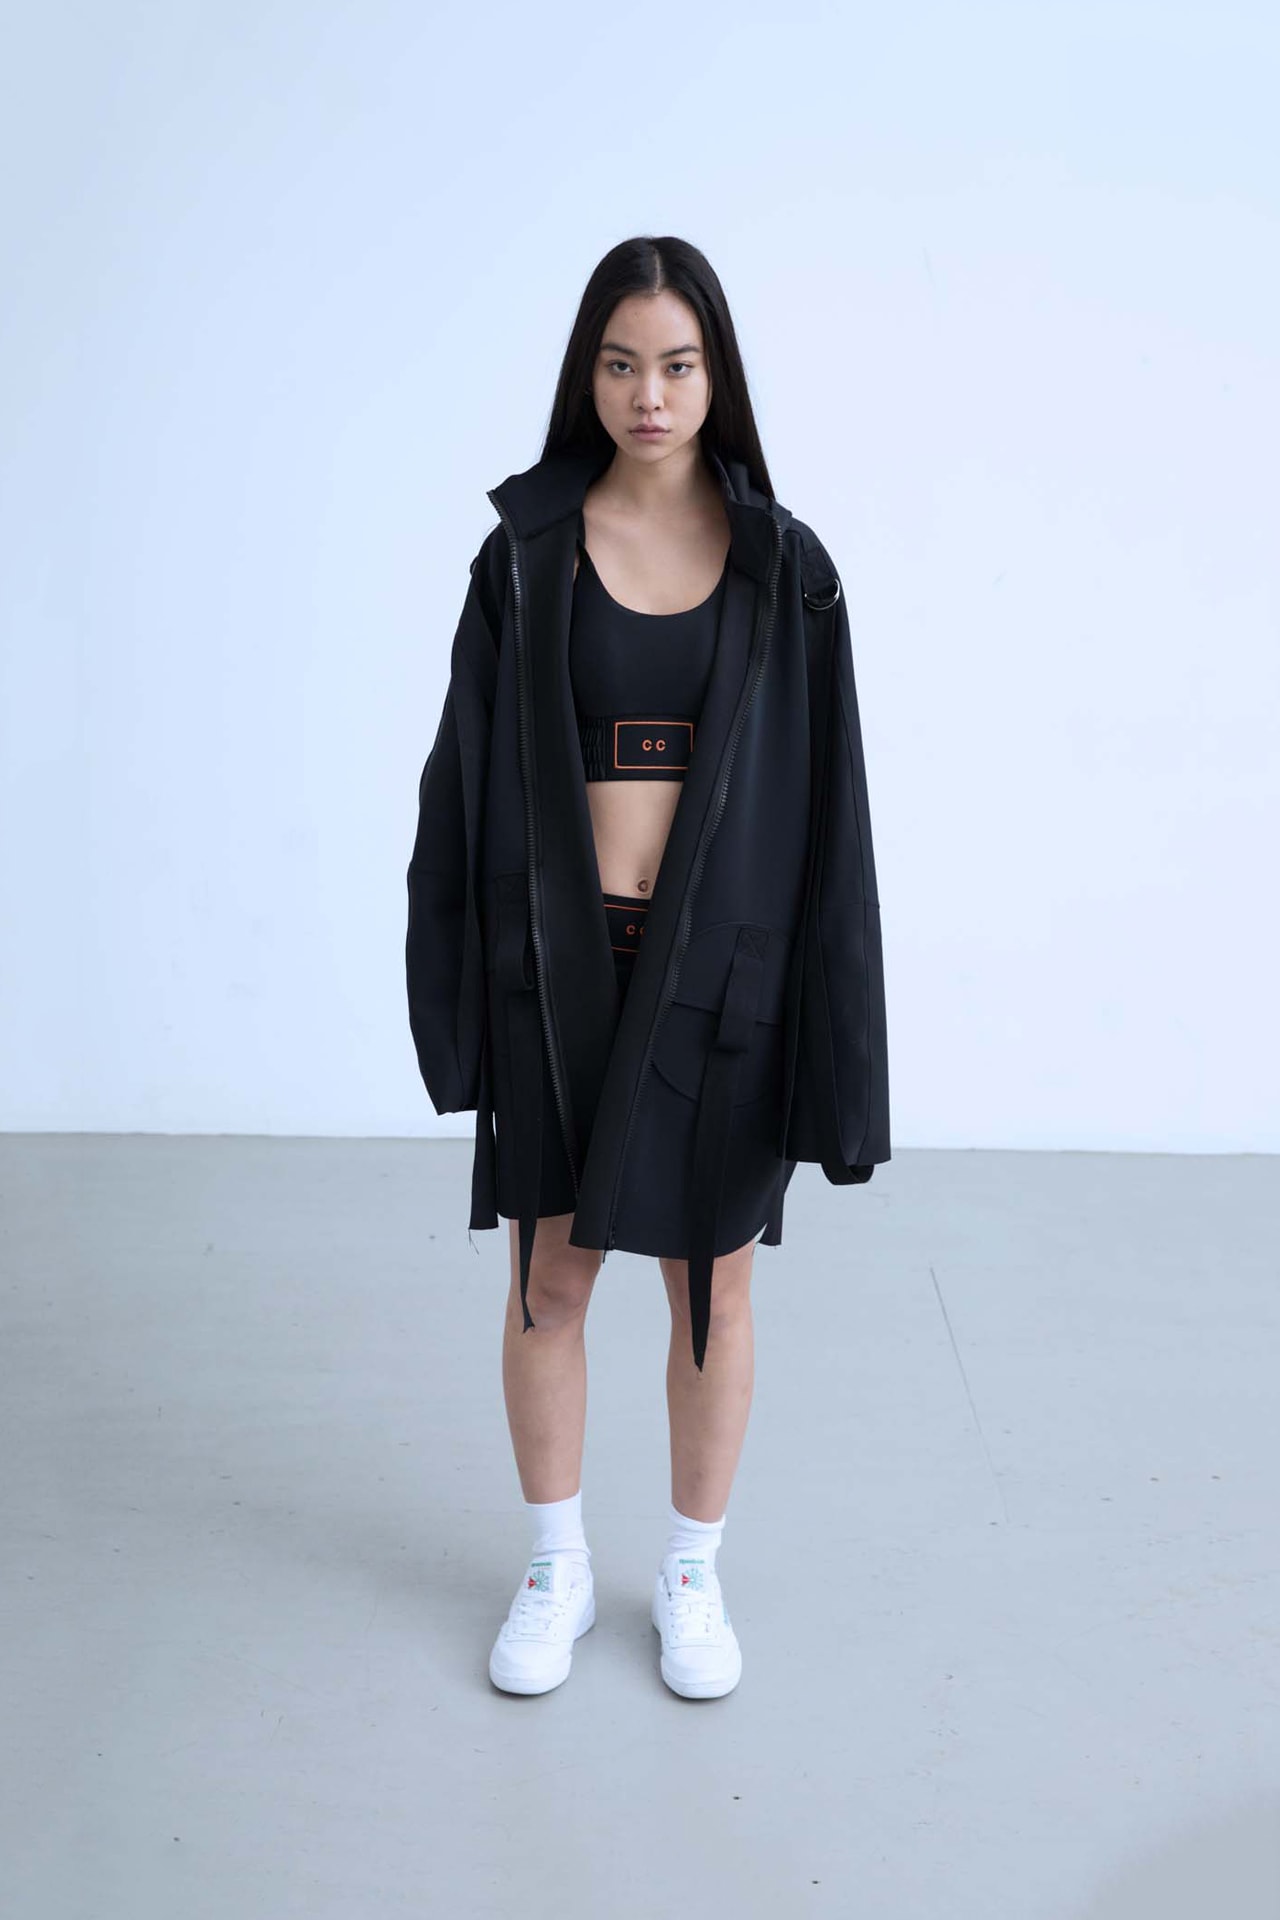 Charli Cohen Fall/Winter 2018 Collection Lookbook Jacket Bra Shorts Black